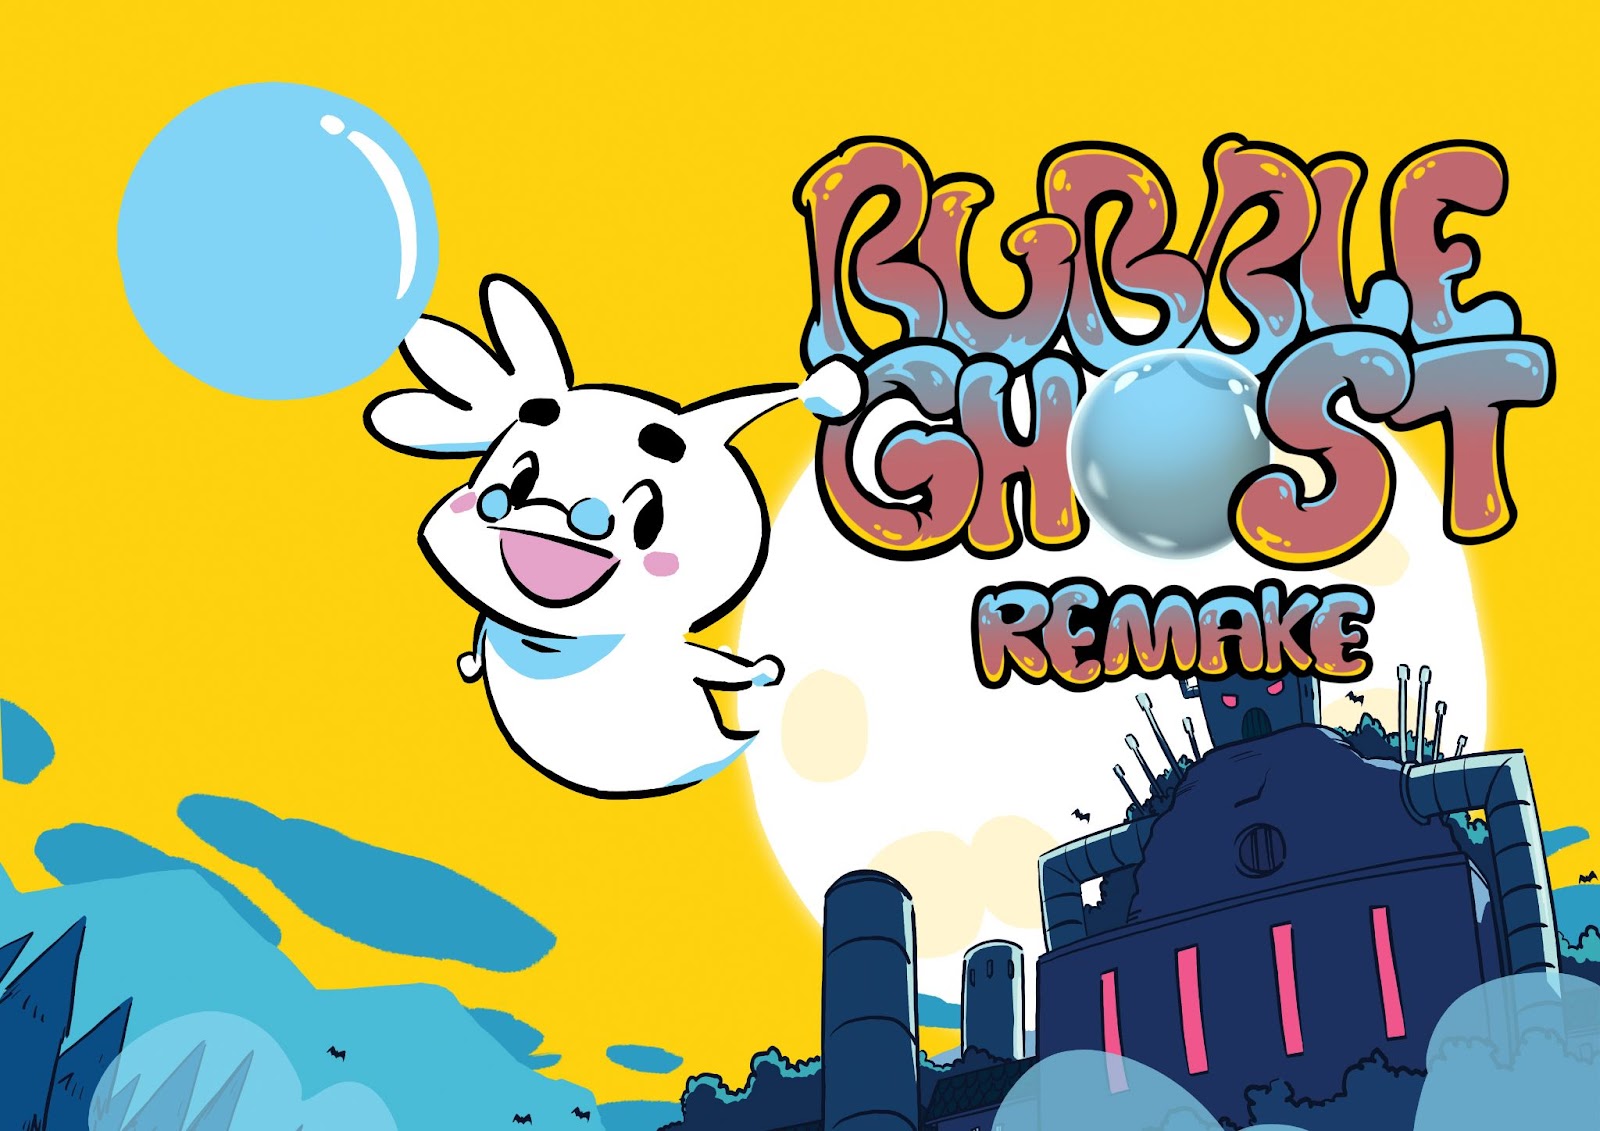 Ilustrador Ken Niimura une forças com a equipe de arte do jogo Bubble Ghost Remake